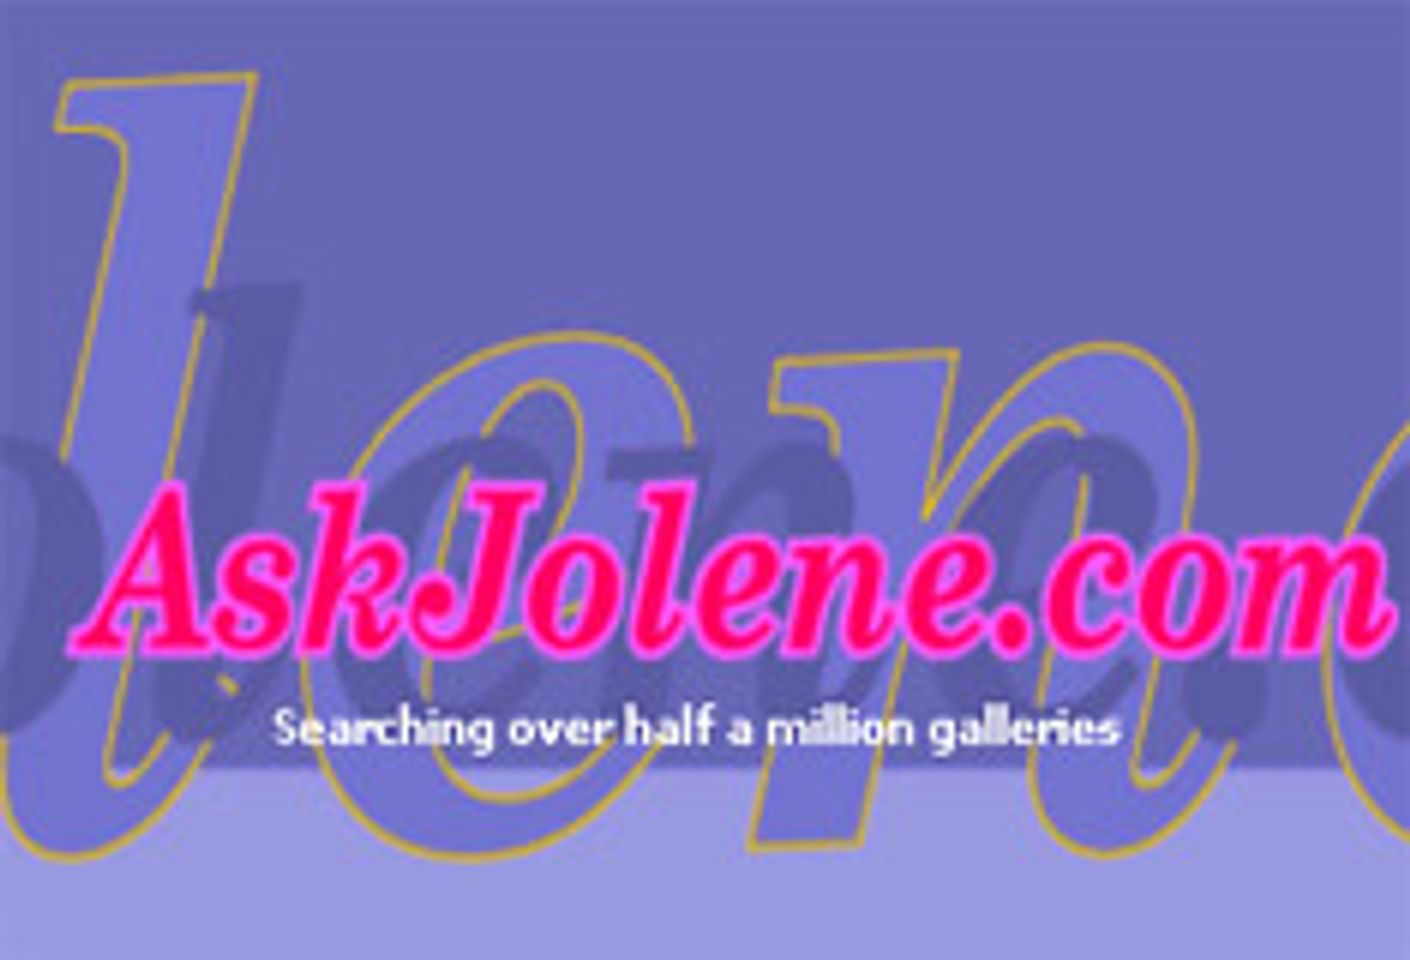 Photo, Movie Searches at AskJolene.com